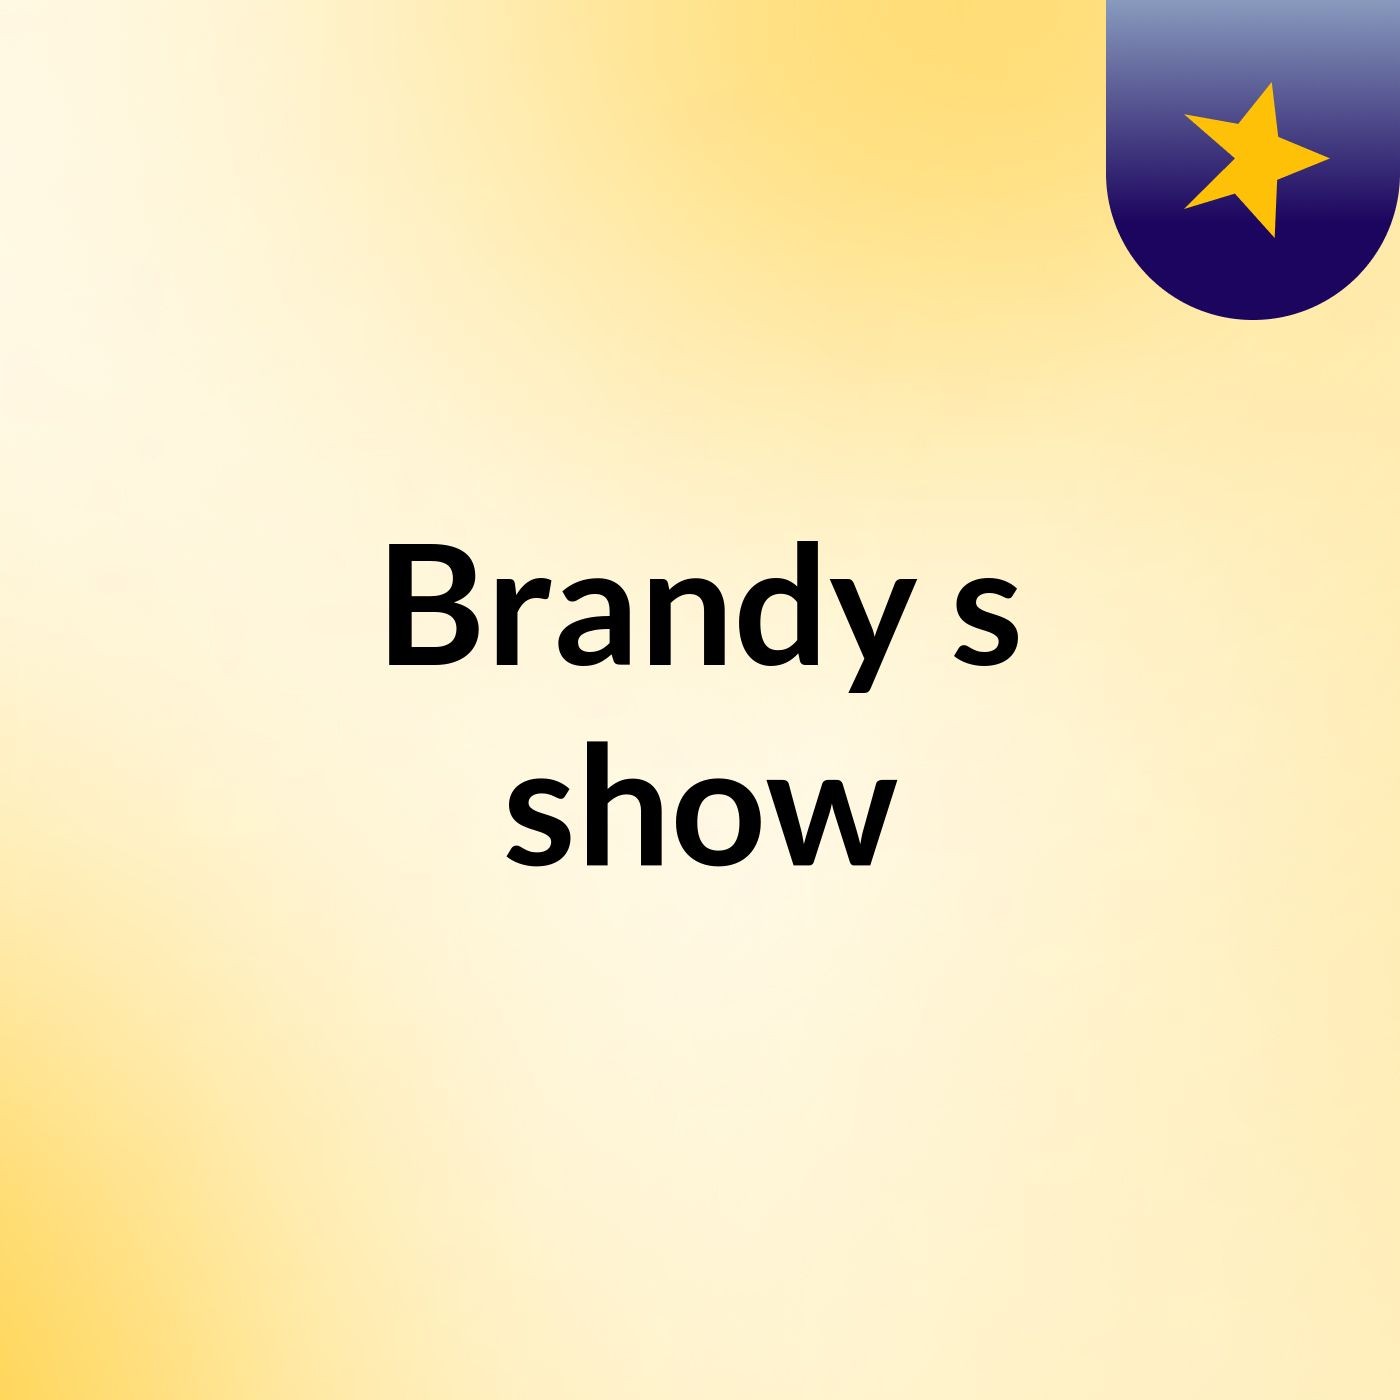 Brandy's show